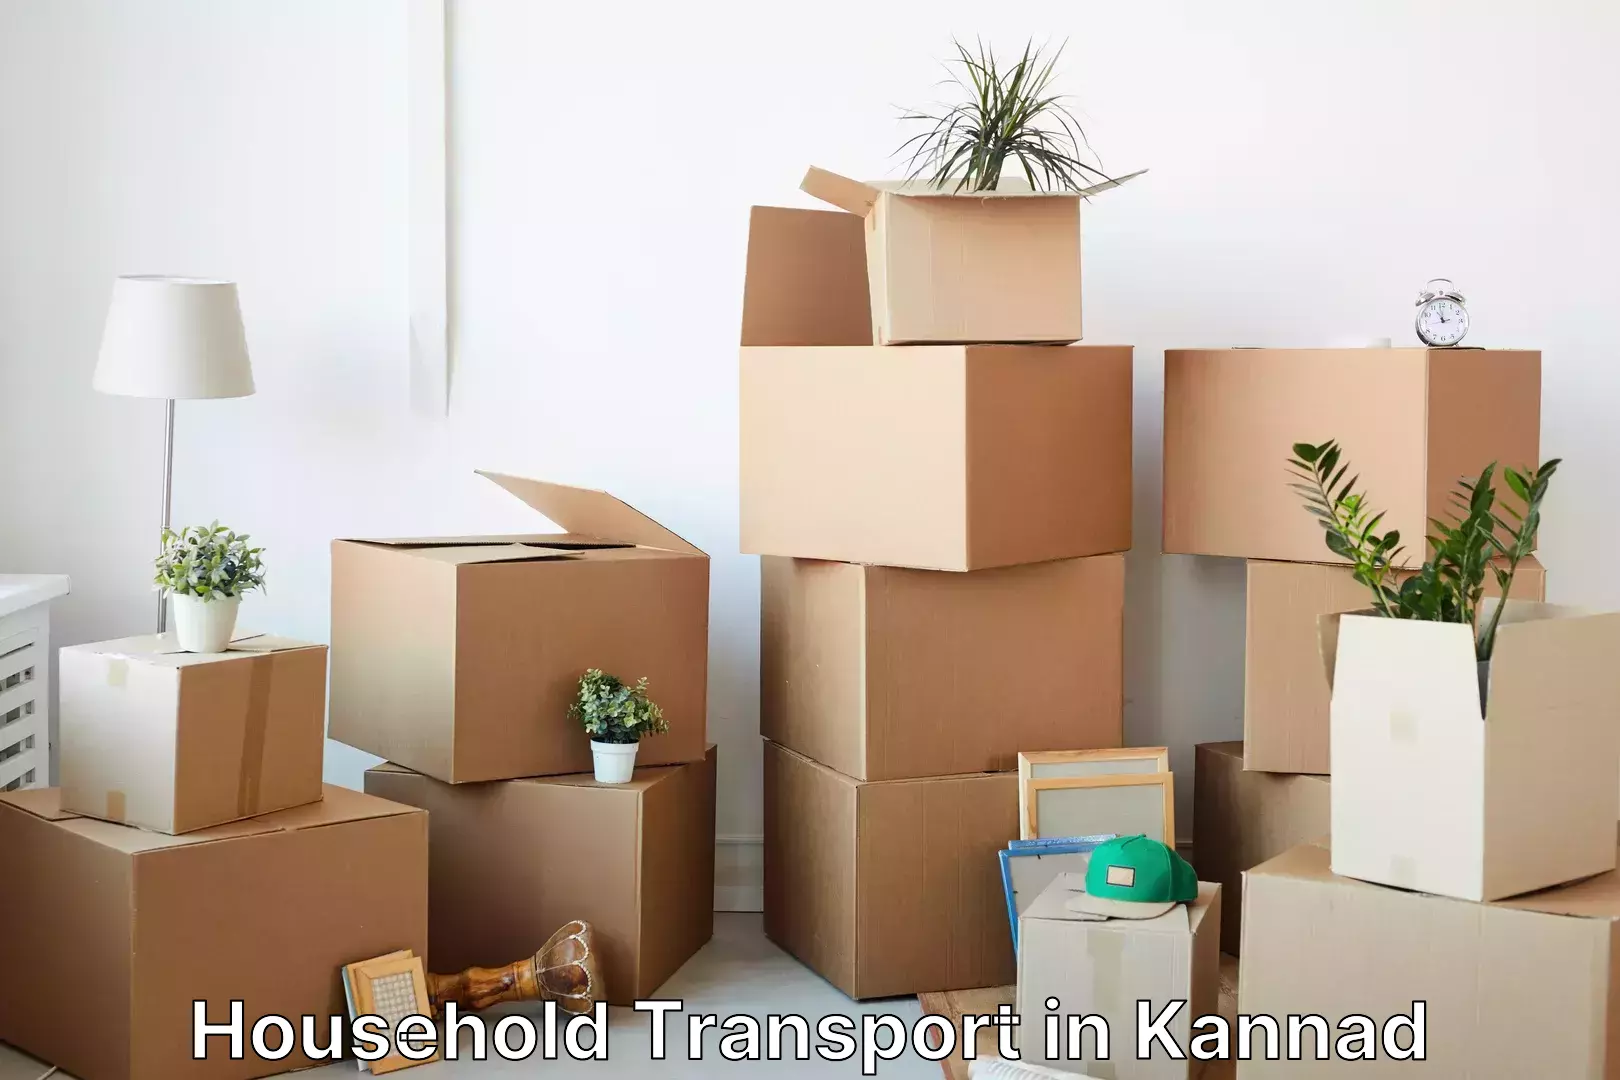 Skilled household transport in Kannad